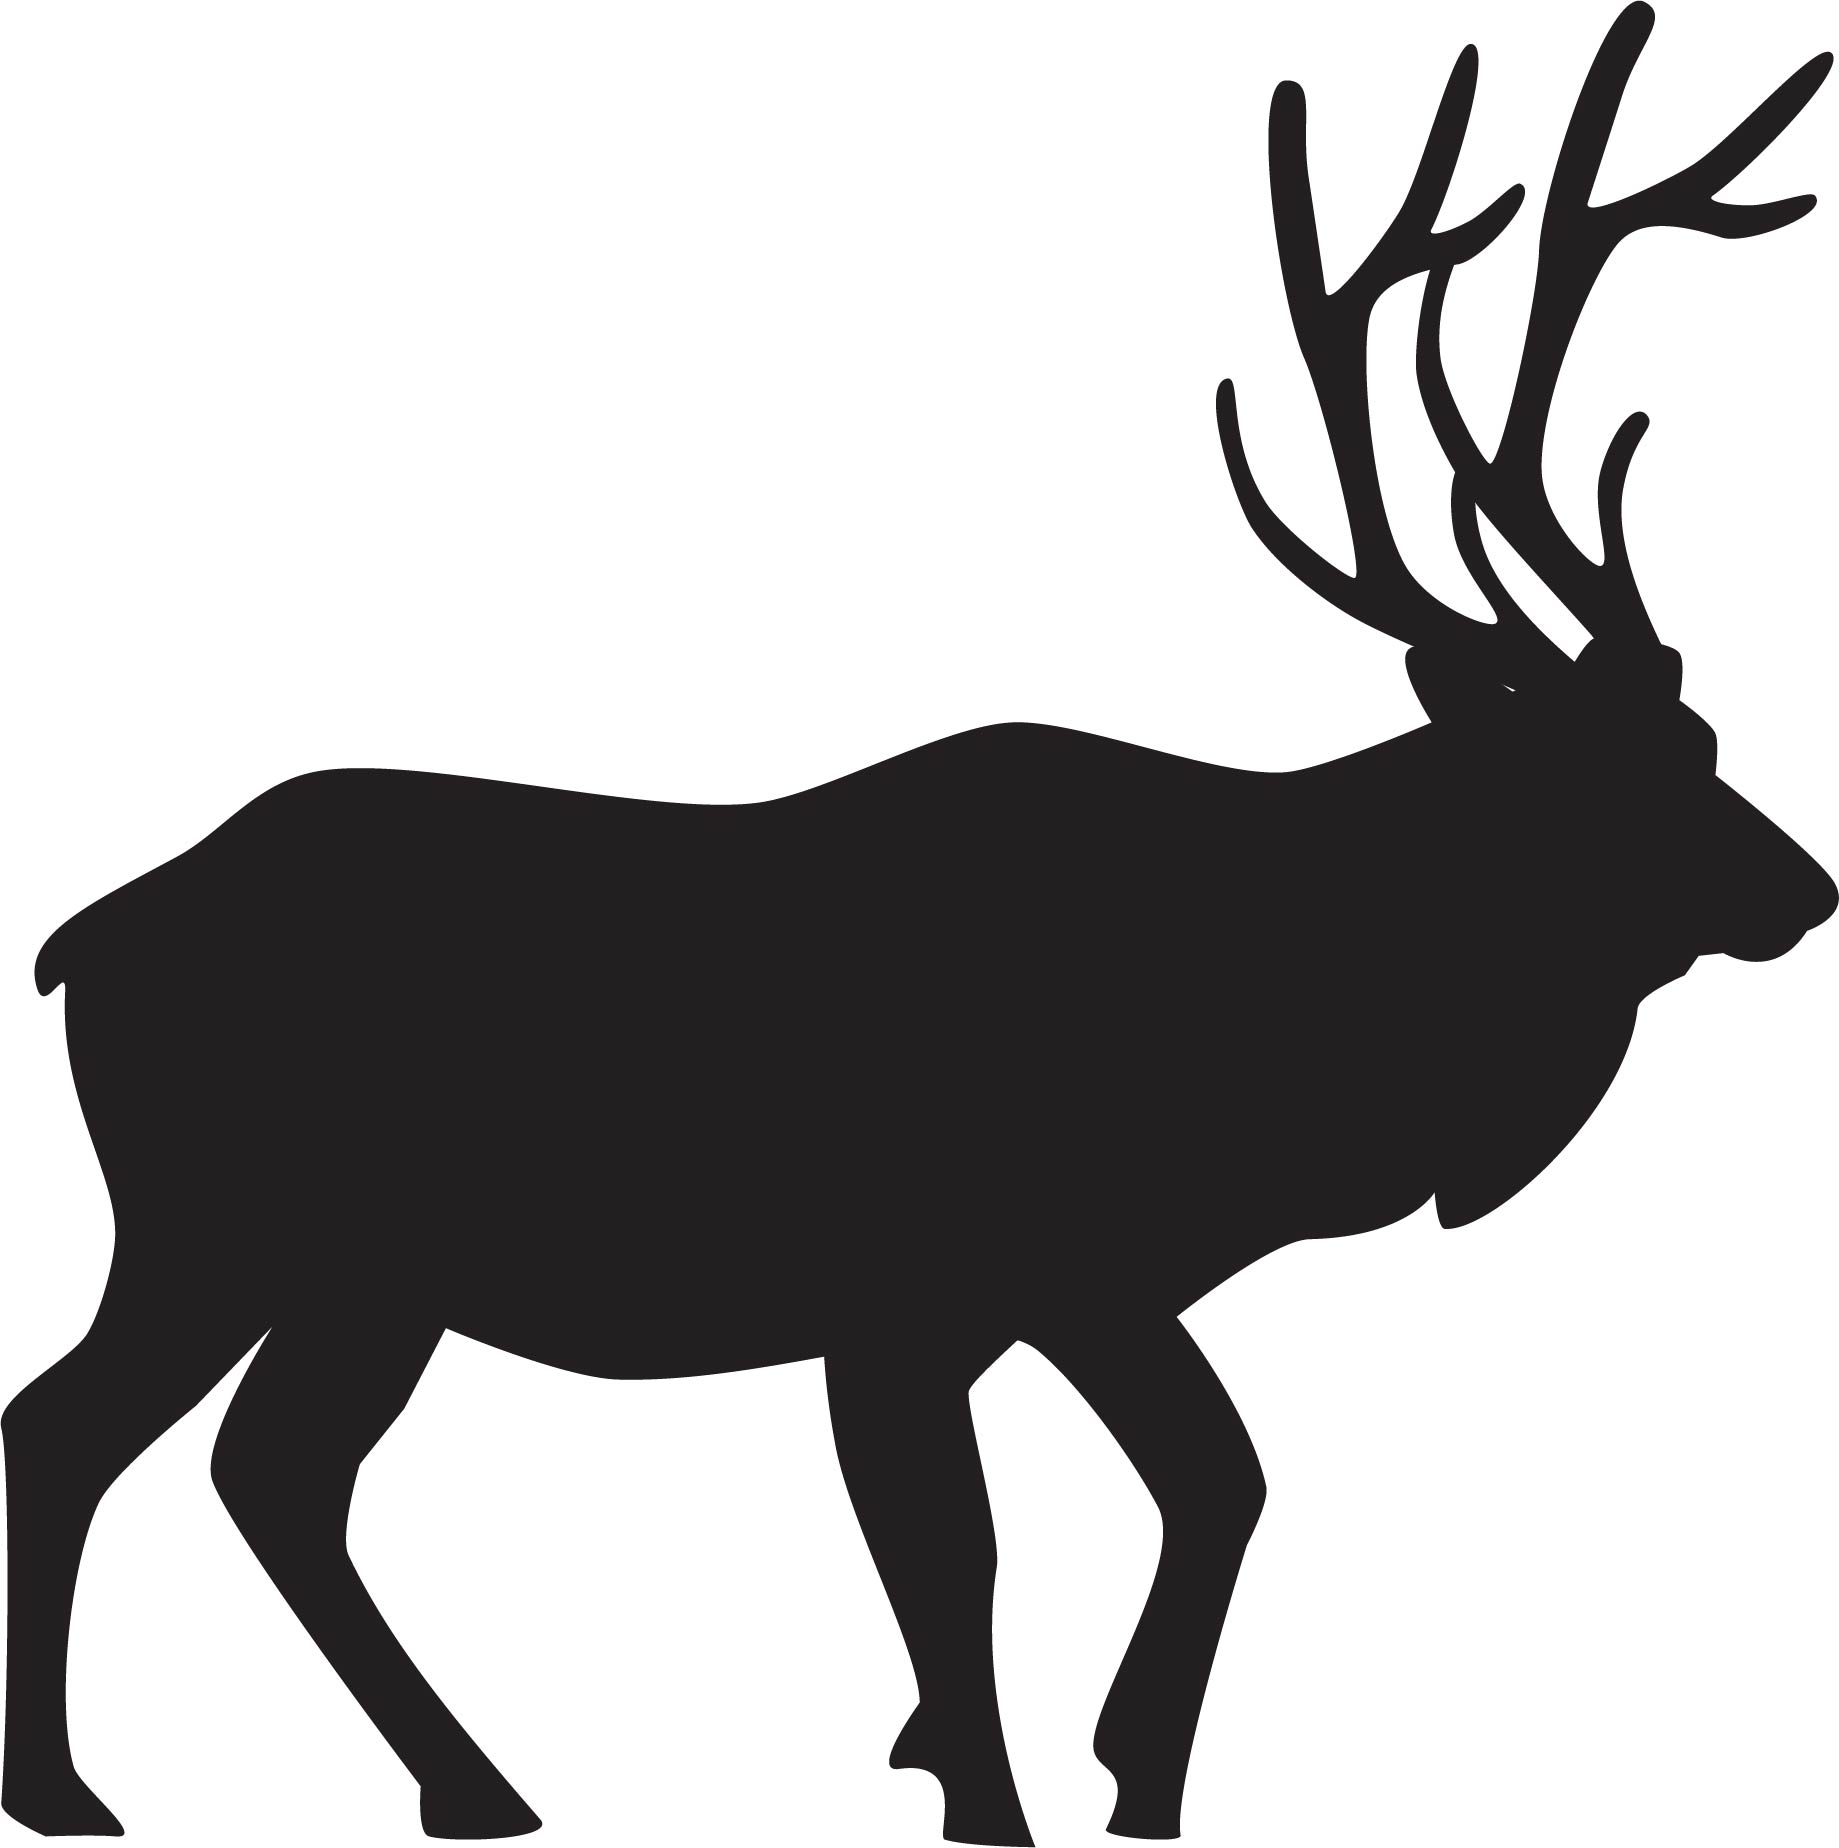 Elk Silhouette Free Vector Art - (95 Free Downloads)